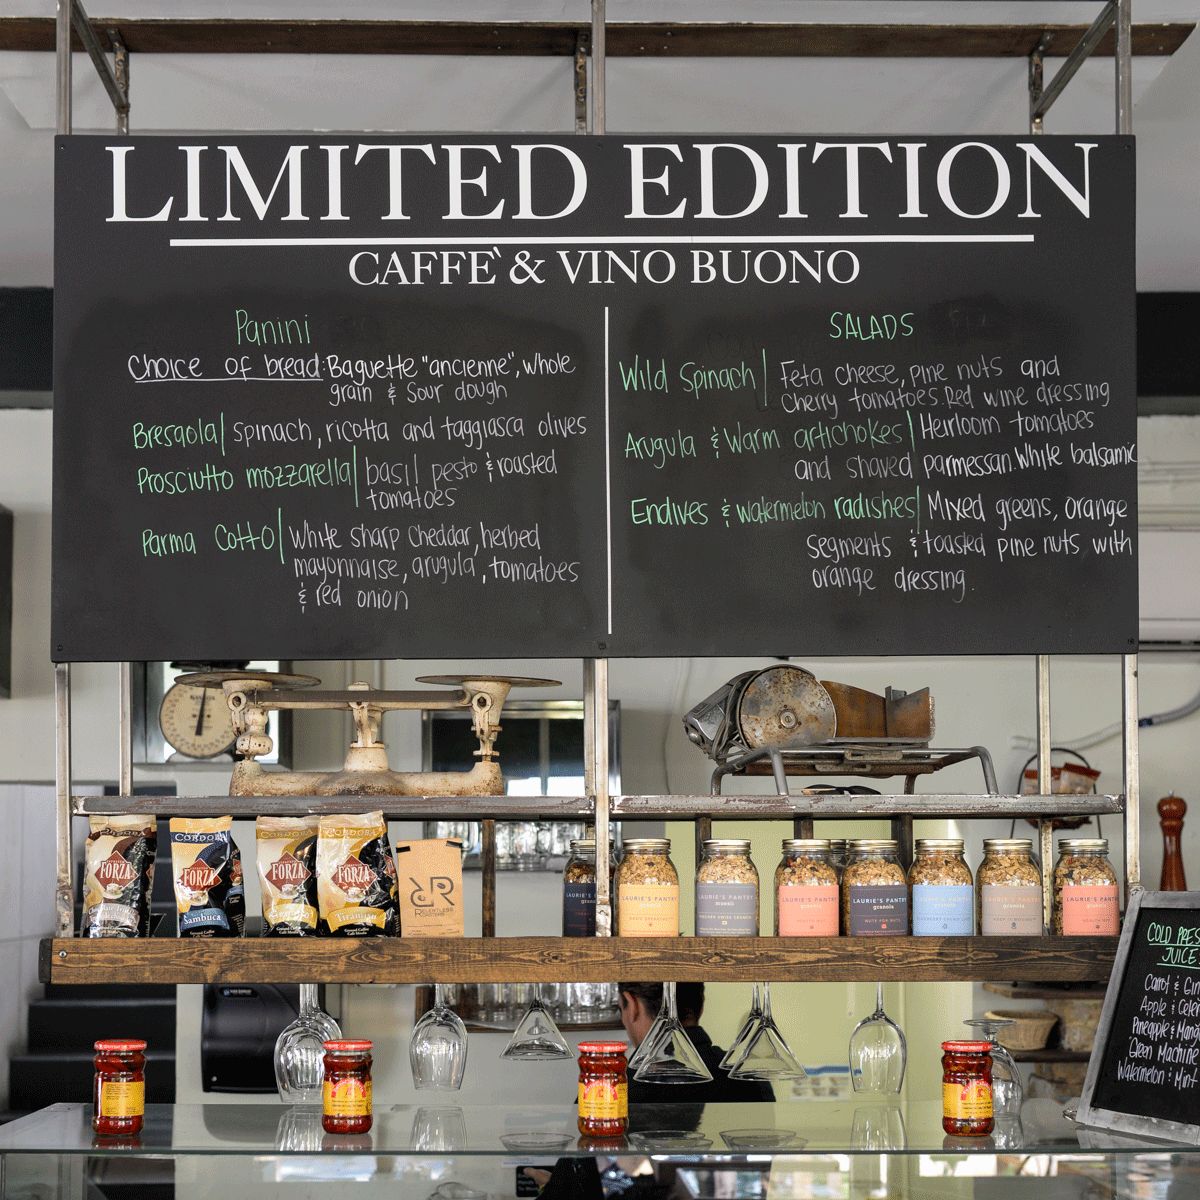 Limited Edition Caffé & Vino Buono